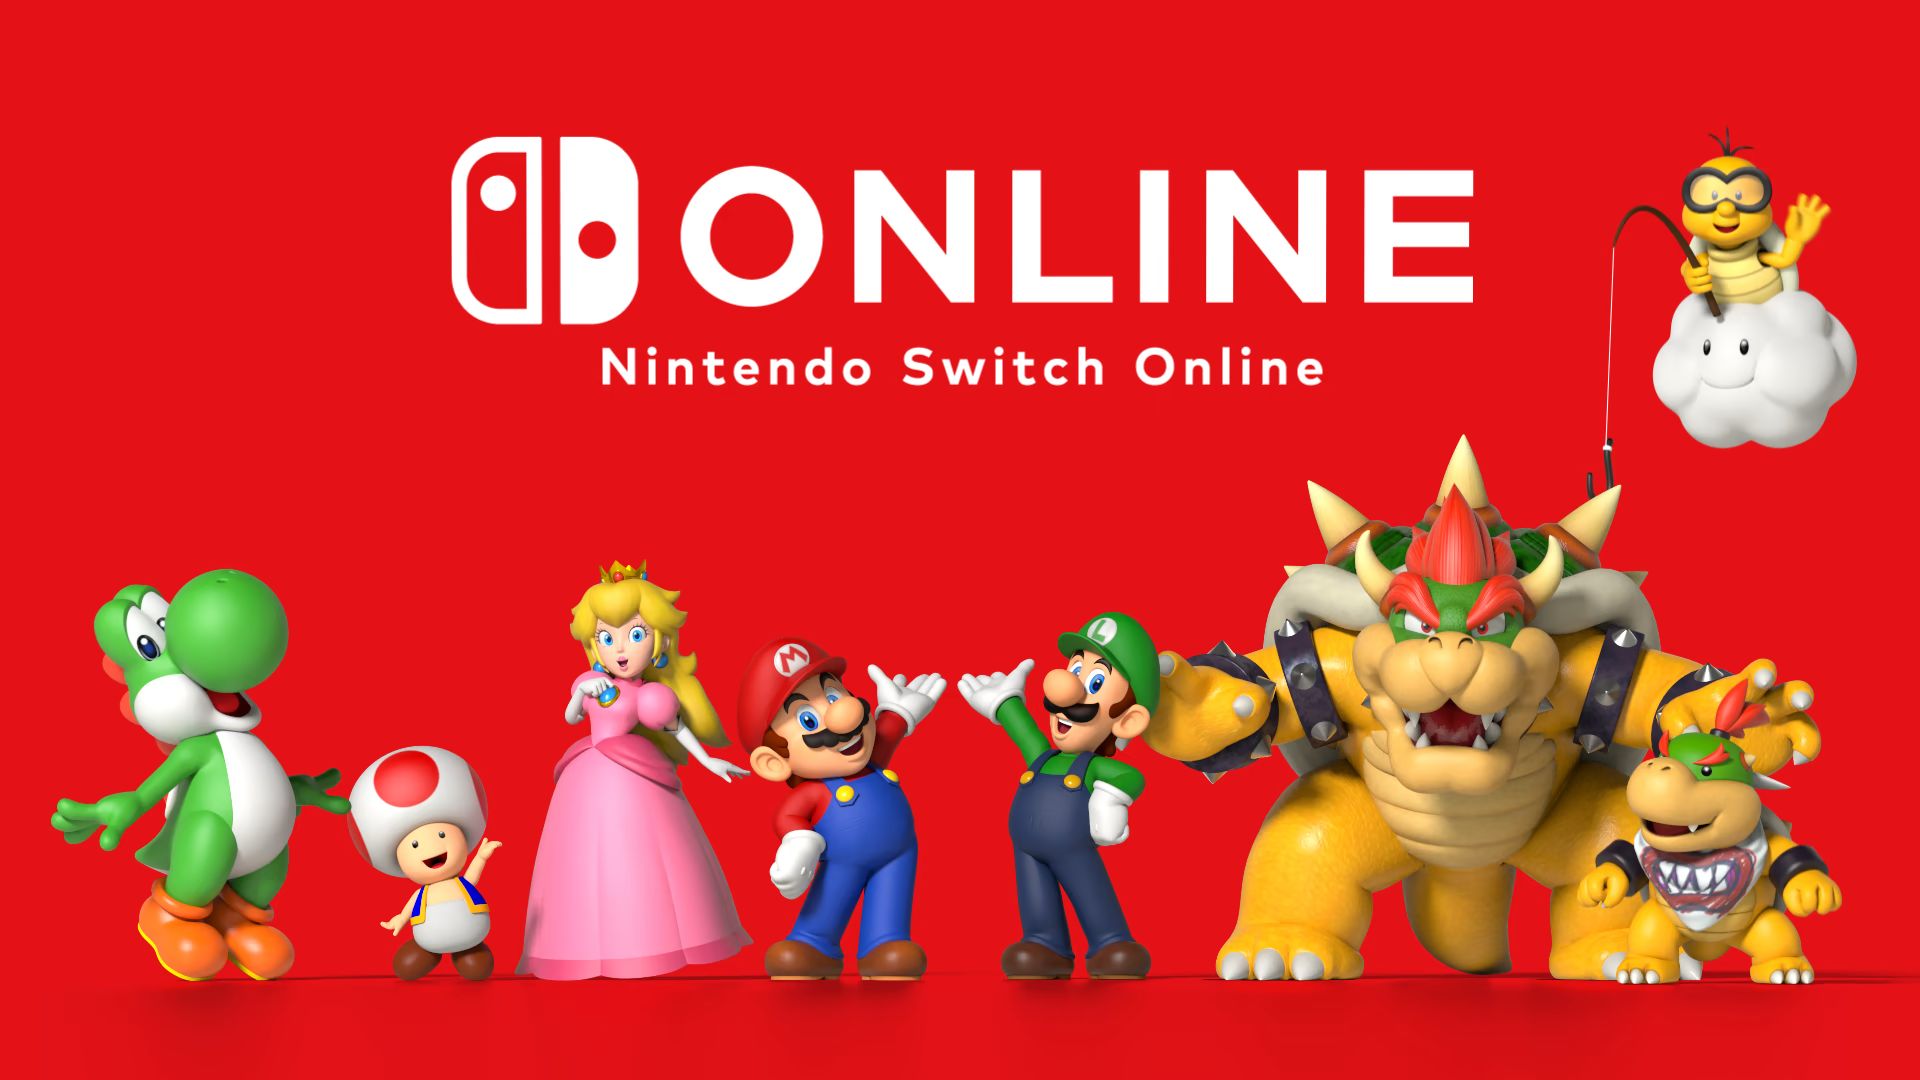 Nintendo Switch Online free trial